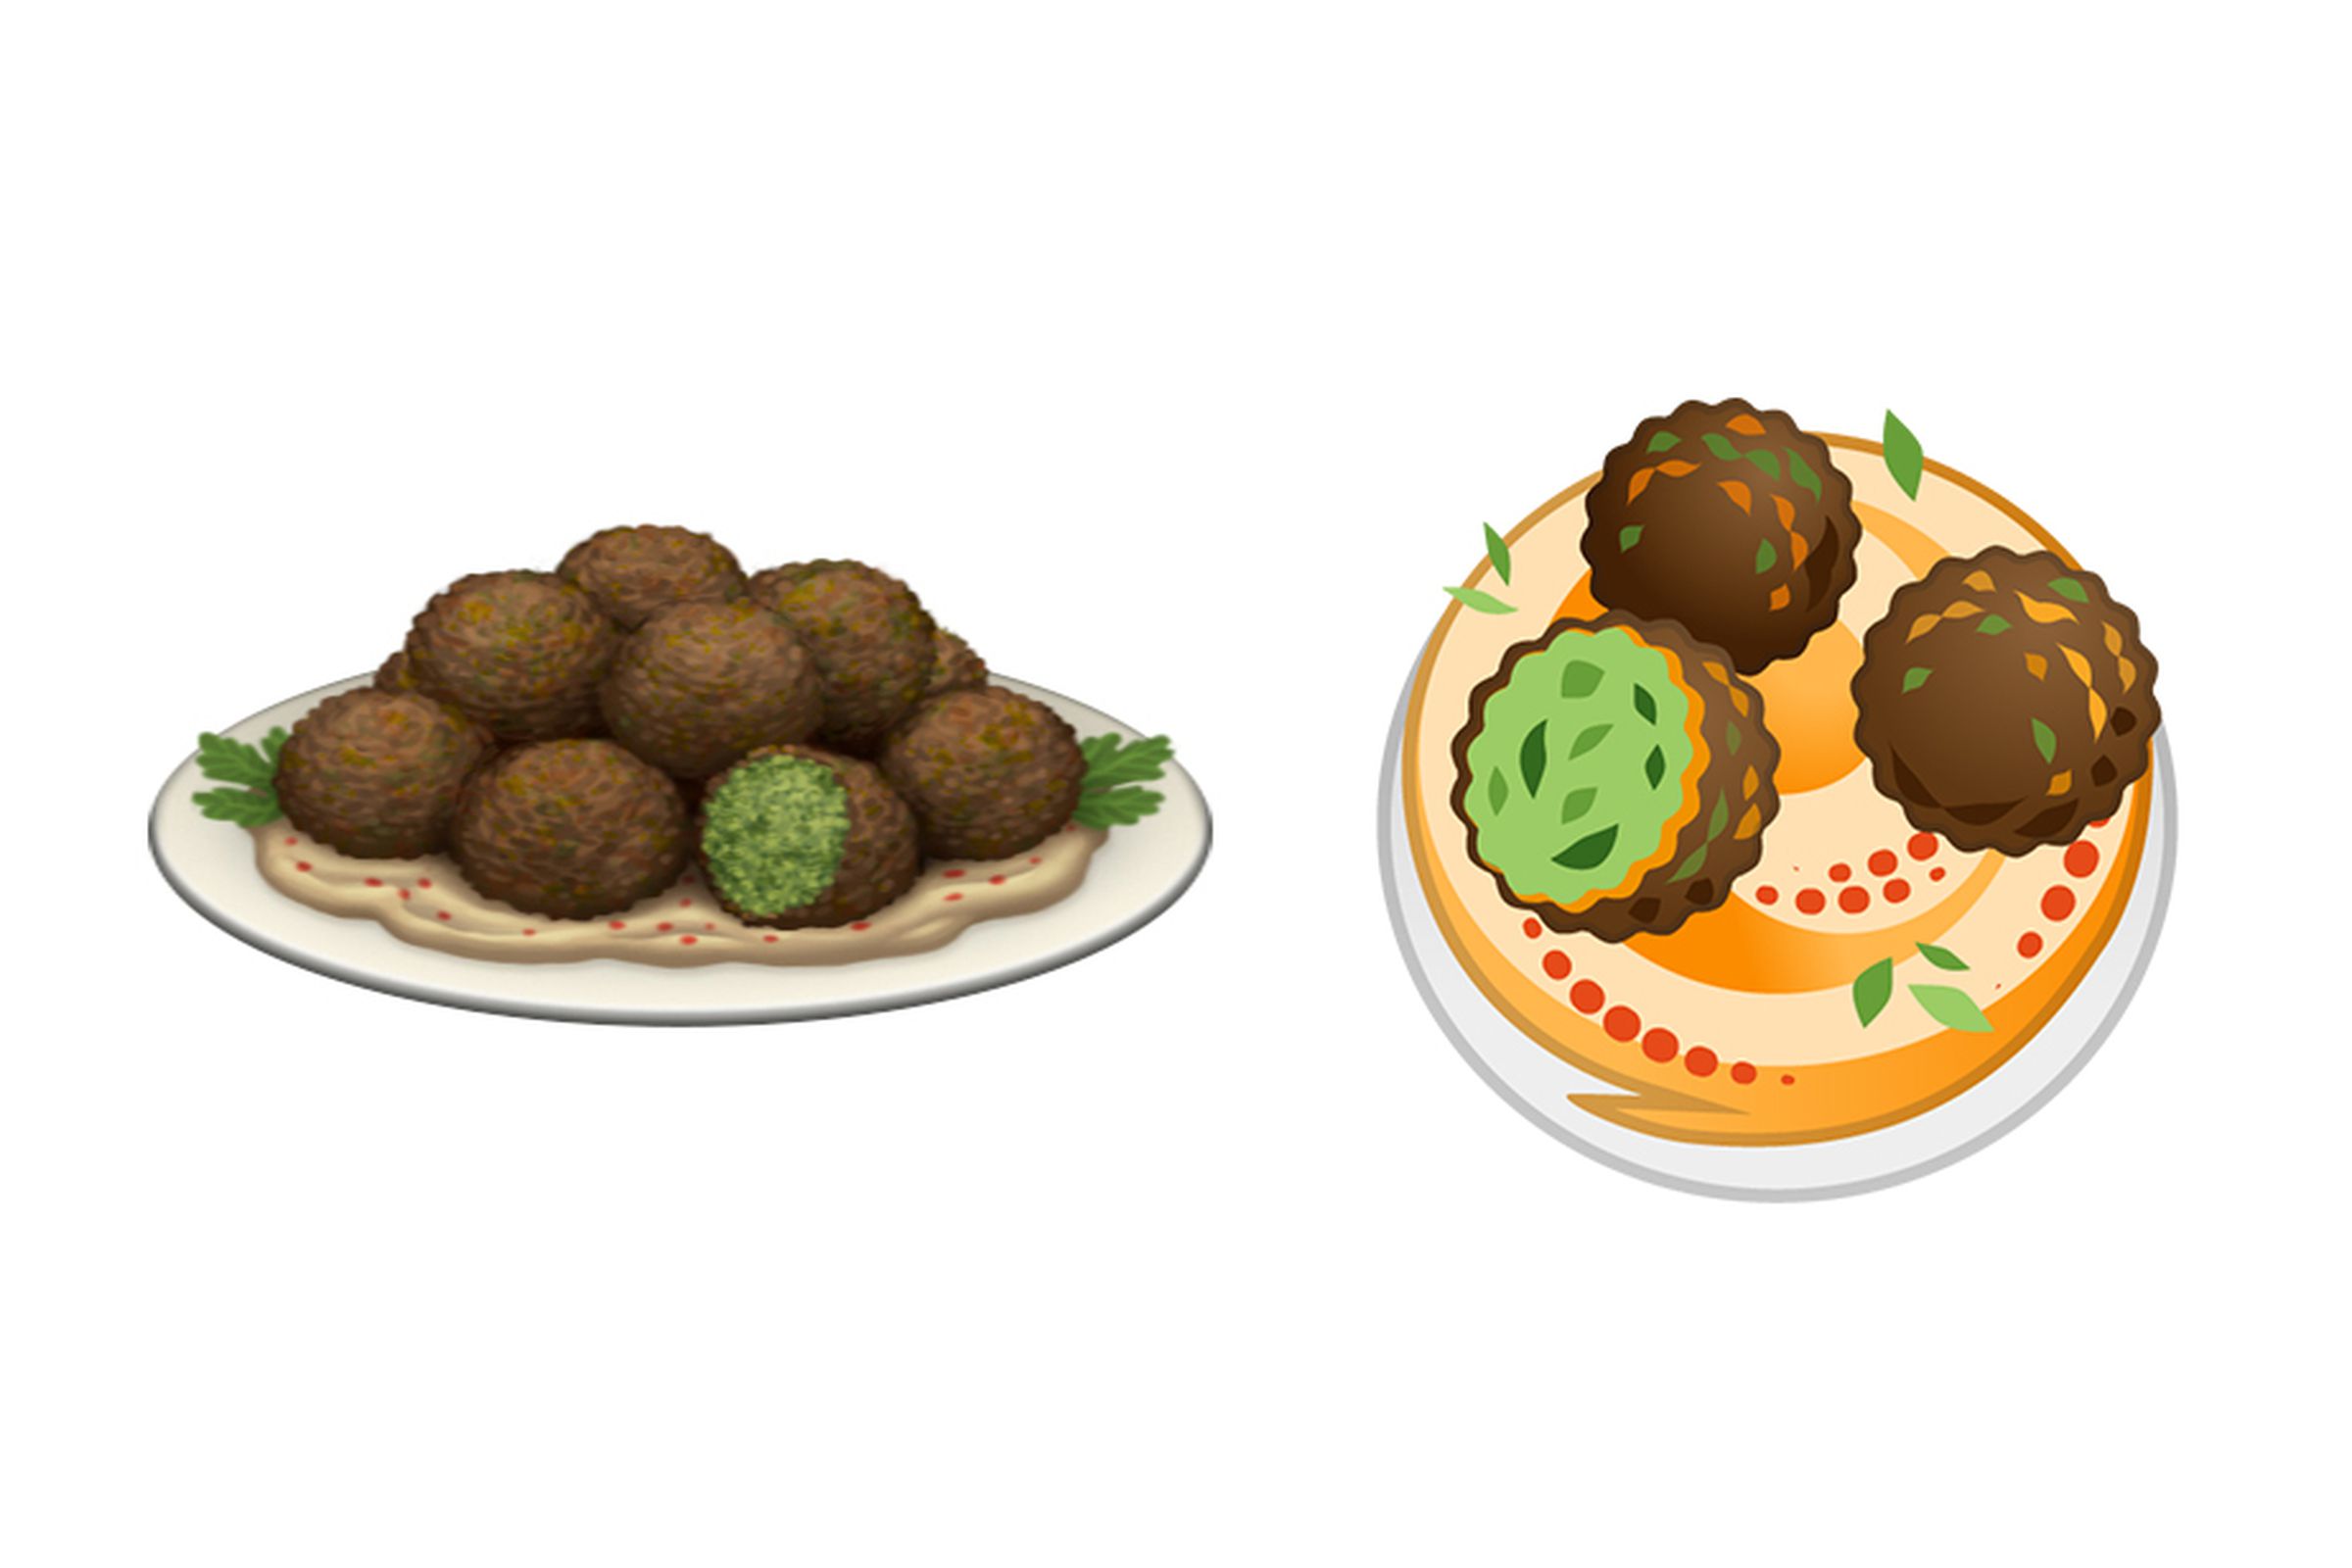 Apple (left) and Google’s (right) take on the falafel emoji.